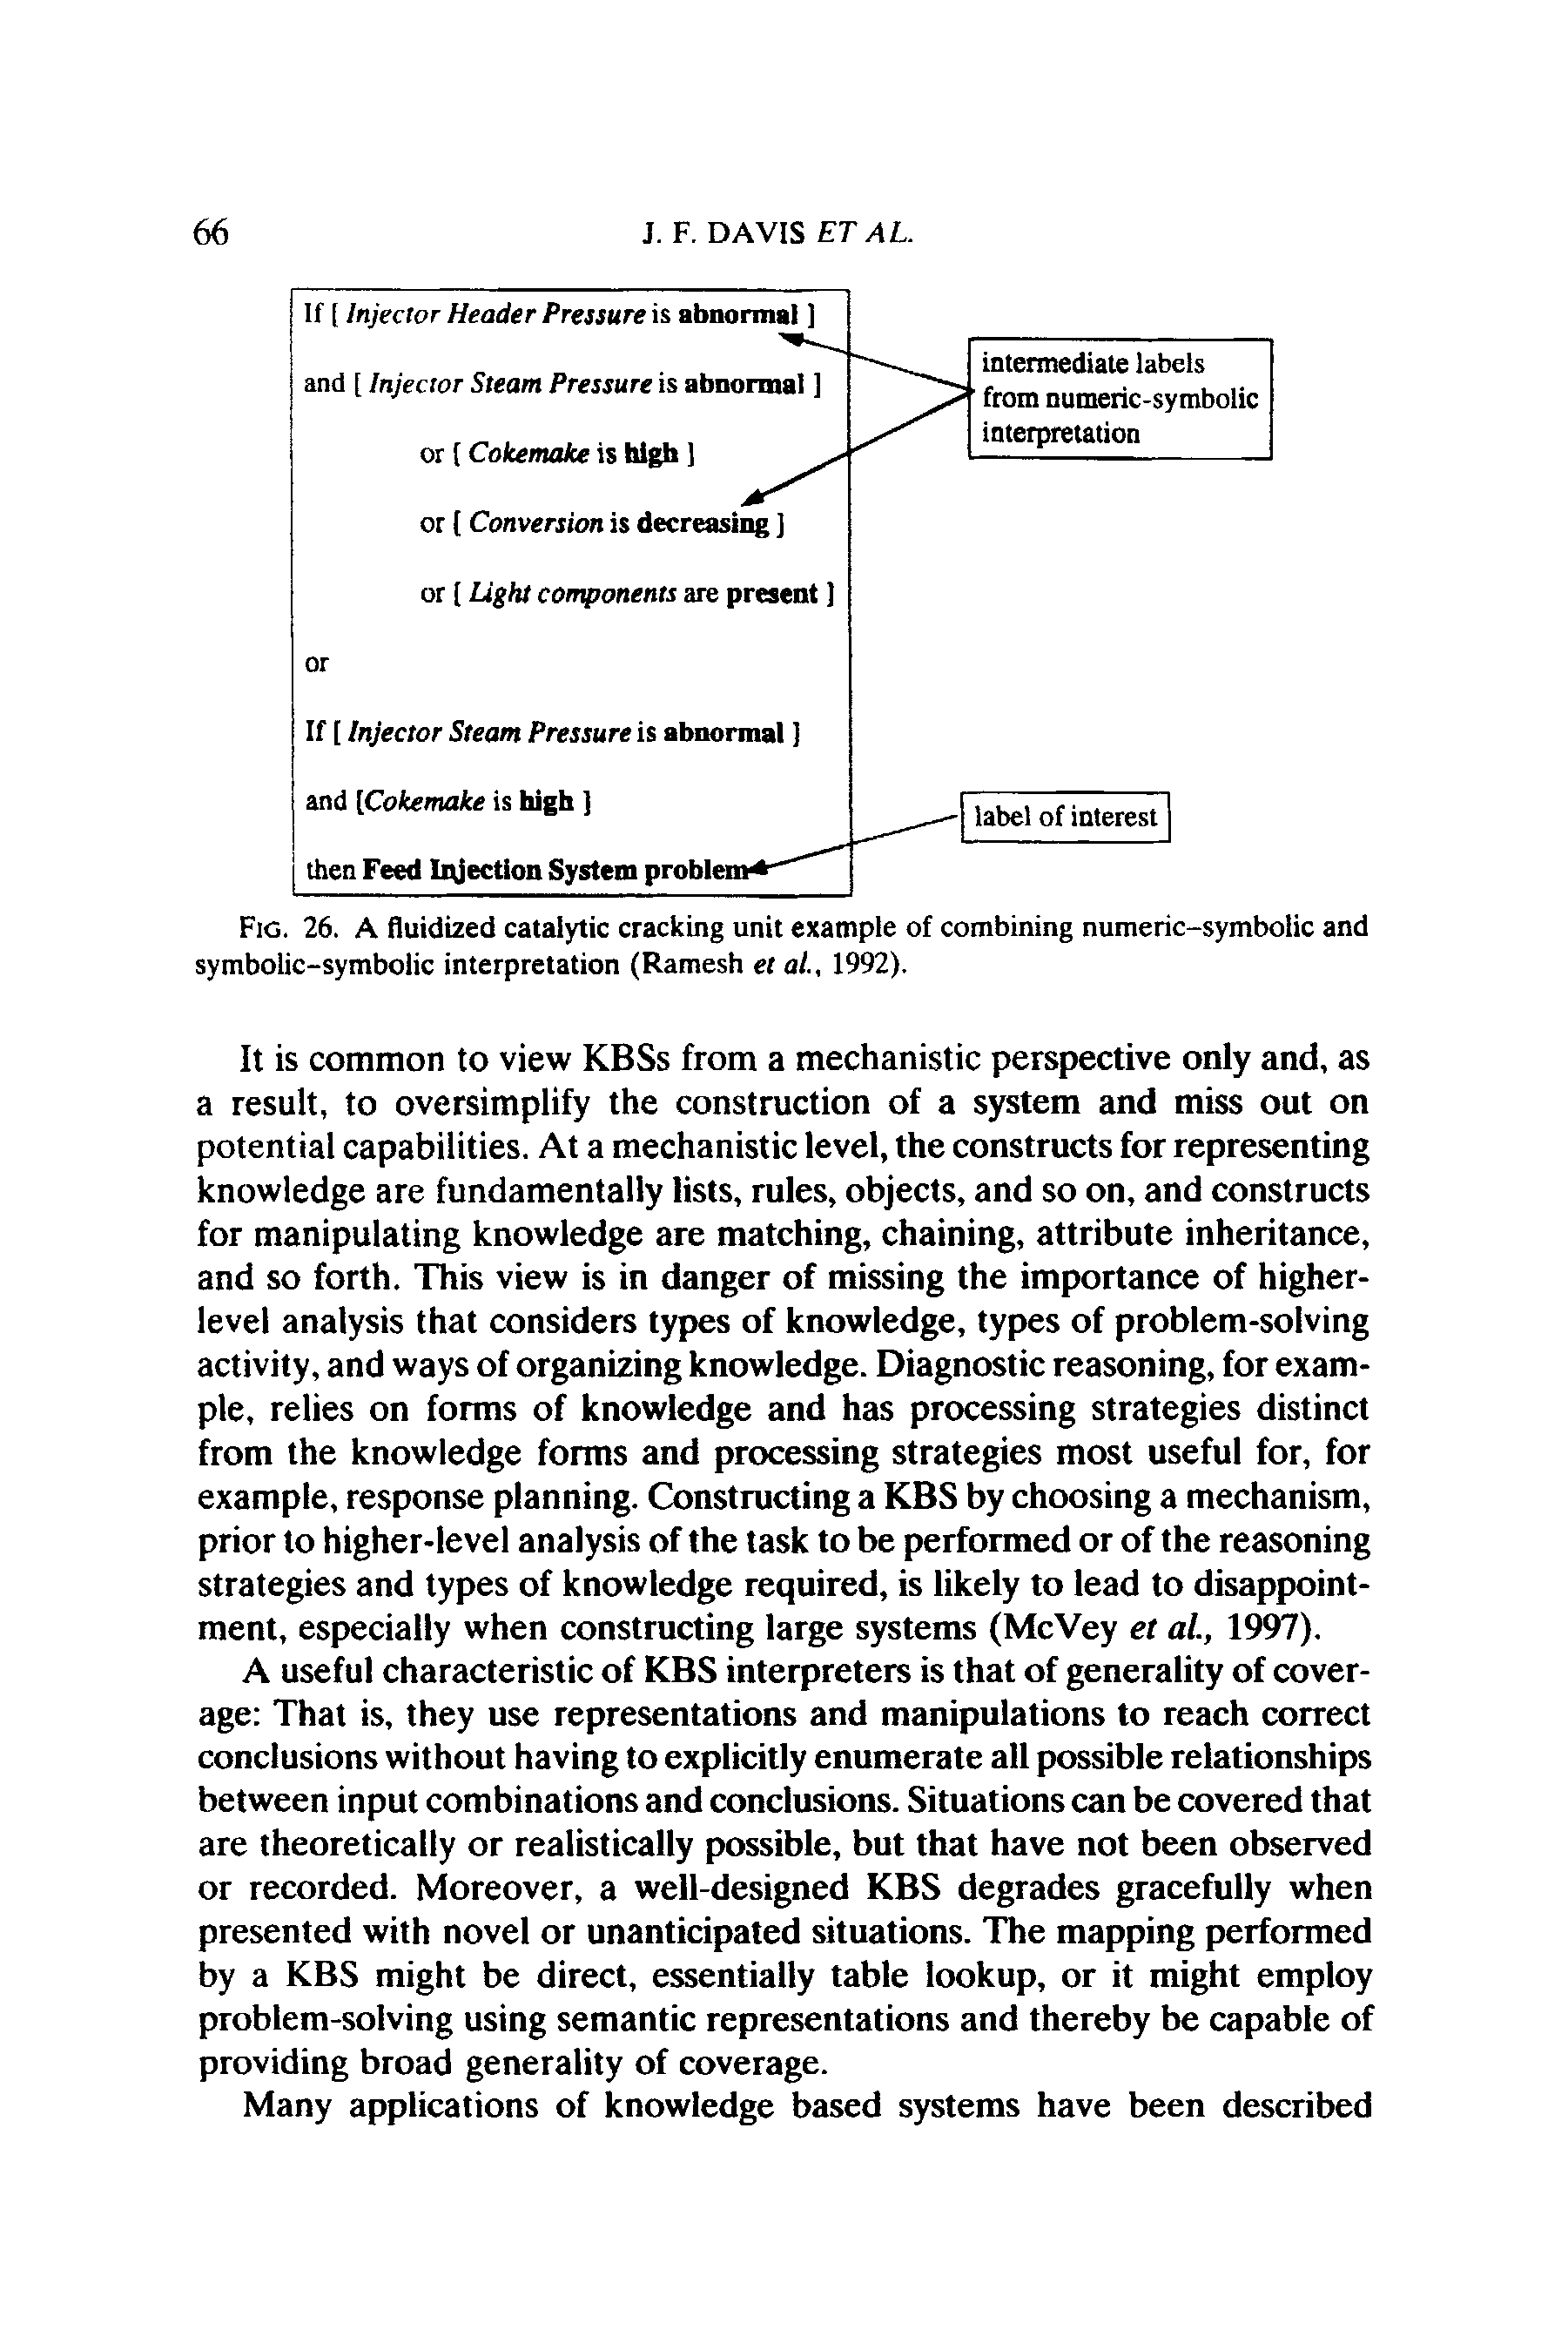 Fig. 26. A fluidized catalytic cracking unit example of combining numeric-symbolic and symbolic-symbolic interpretation (Ramesh et at., 1992).